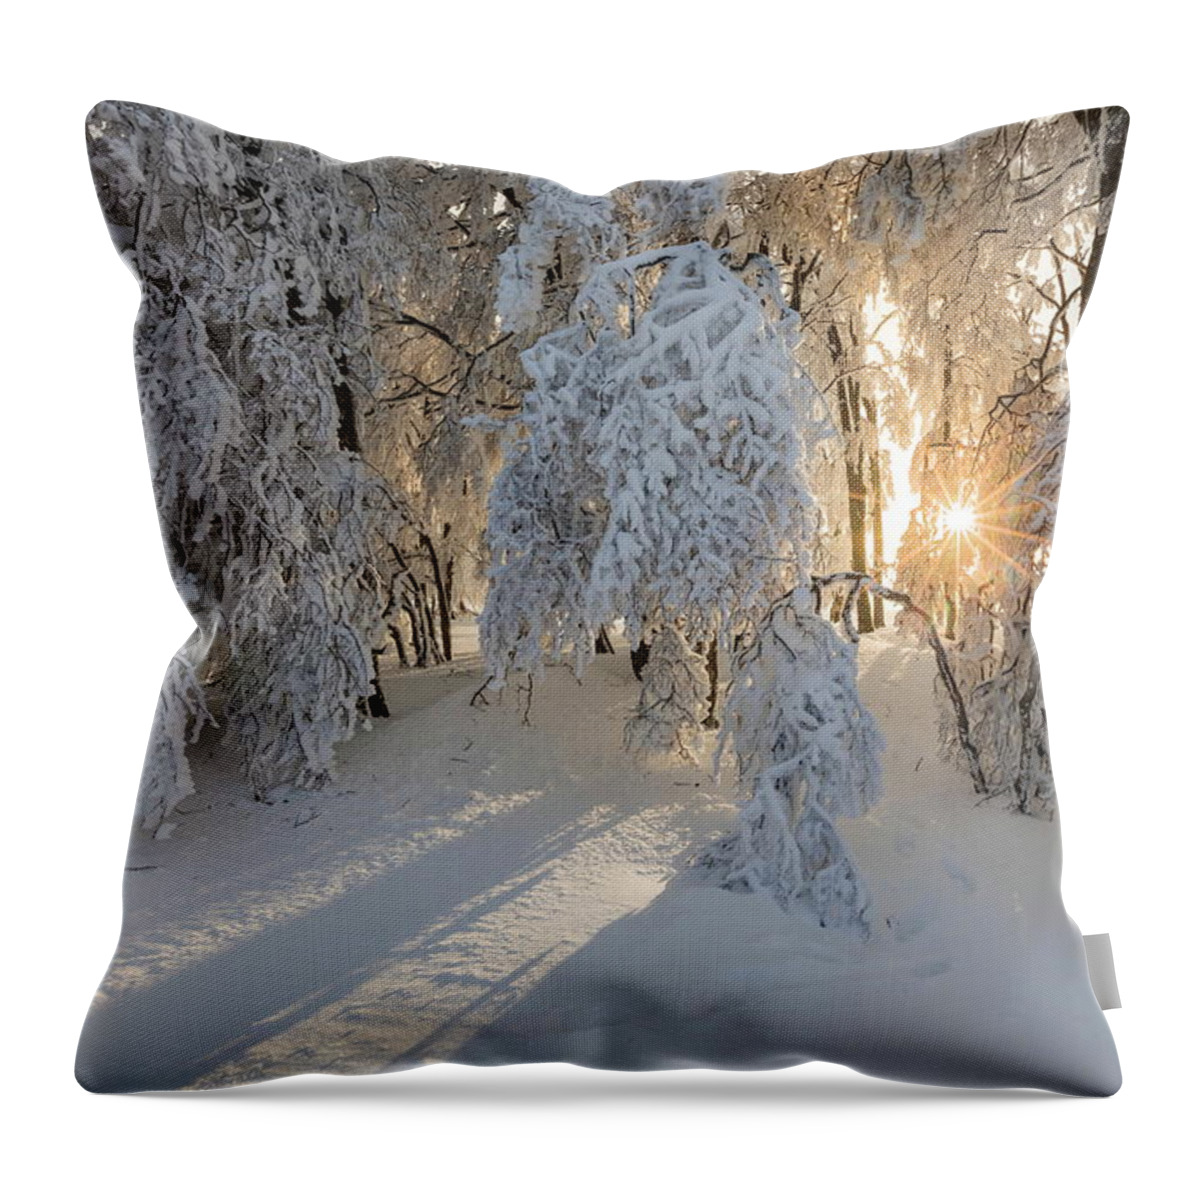 Estock Throw Pillow featuring the digital art Snow Covered Trees #1 by Reinhard Schmid